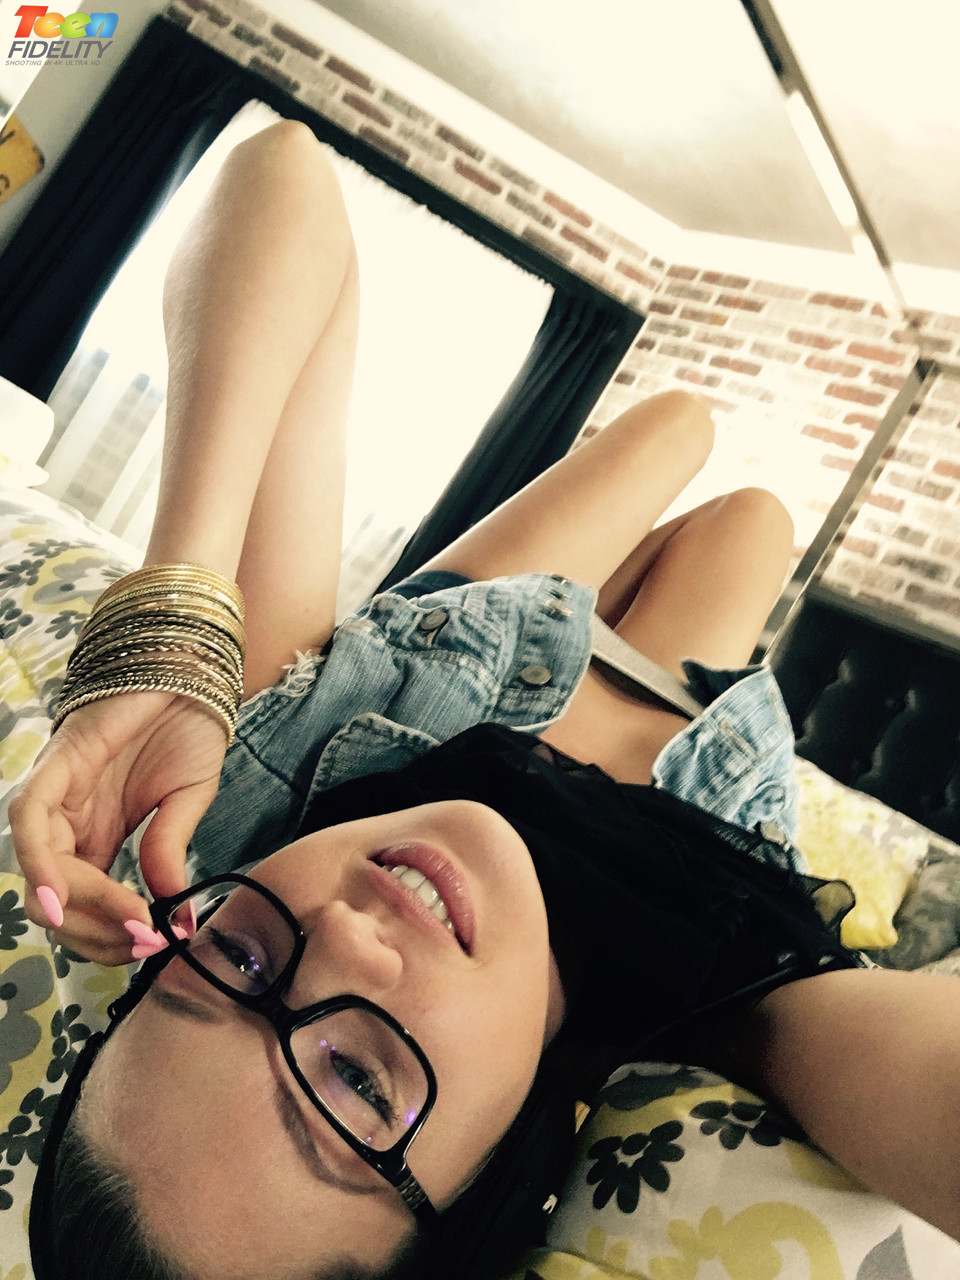 Skinny chick with ponytail Elena Koshka reveals her tiny tits and adorable ass porn photo #425298562 | Teen Fidelity Pics, Elena Koshka, Ryan Madison, Sandals, mobile porn